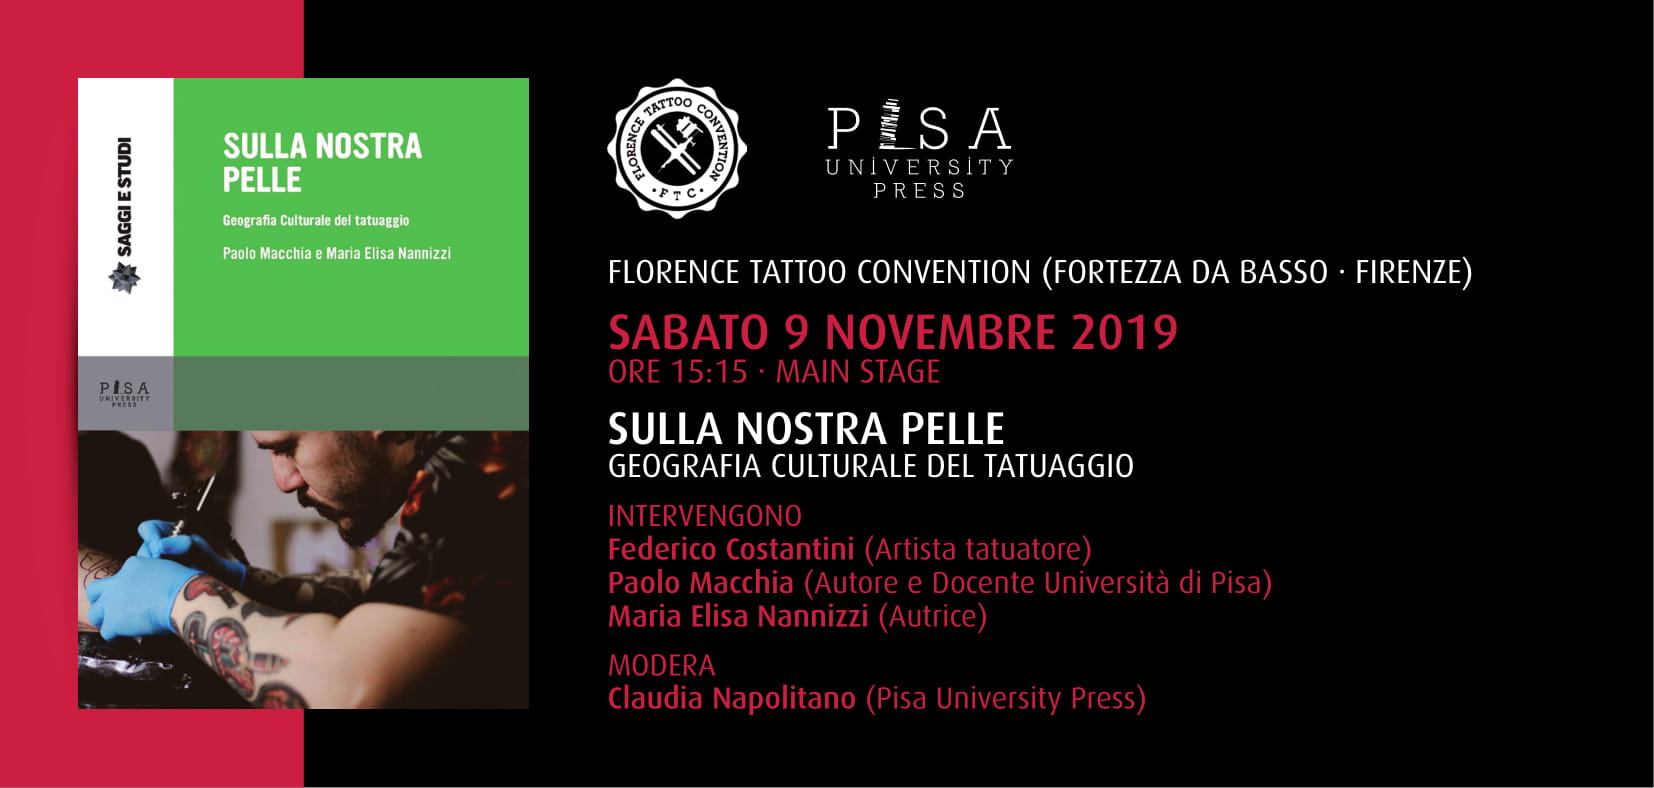 Invito evento Florence Tattoo Convention-1.jpg